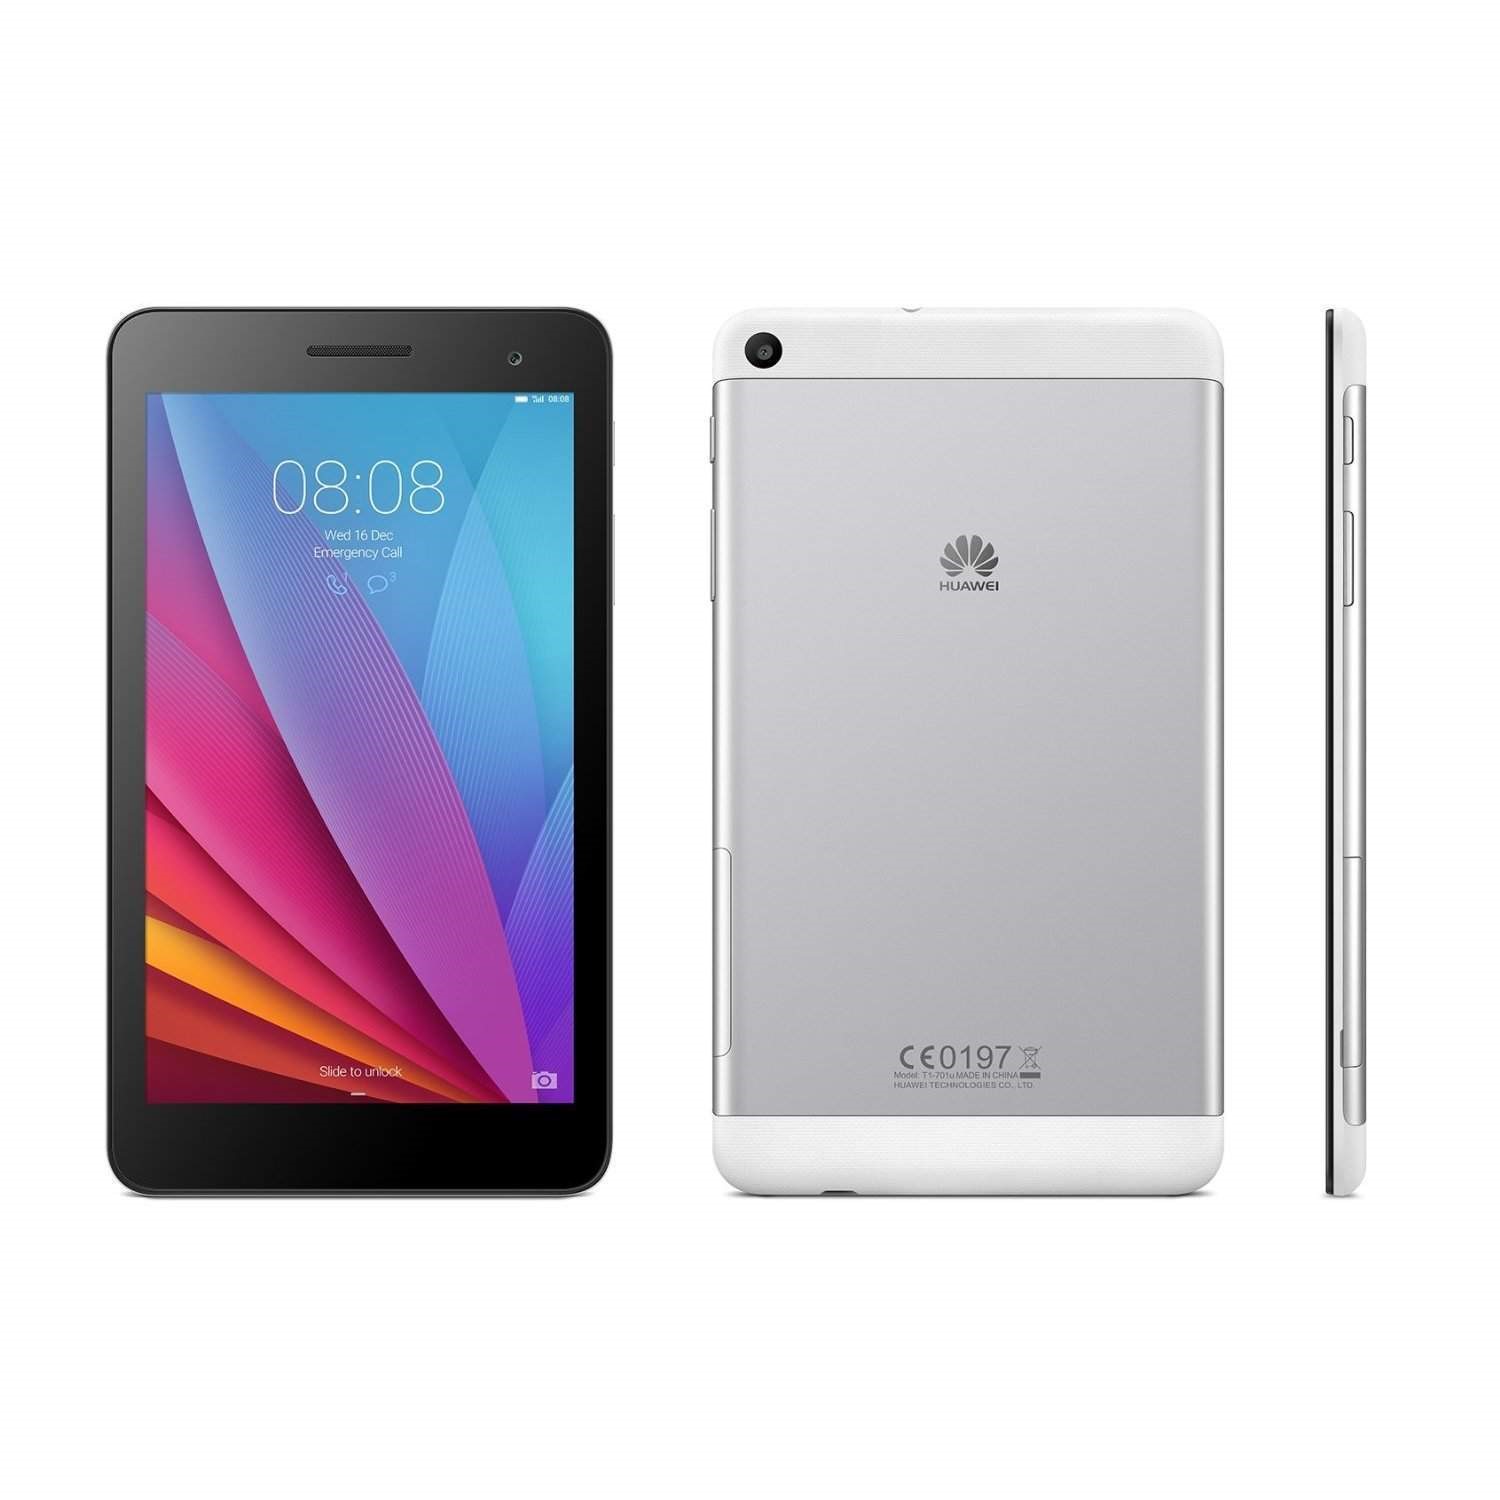 Huawei MediaPad T1 1GB 8GB WiFi 7 Inch Android 4.4 Tablet